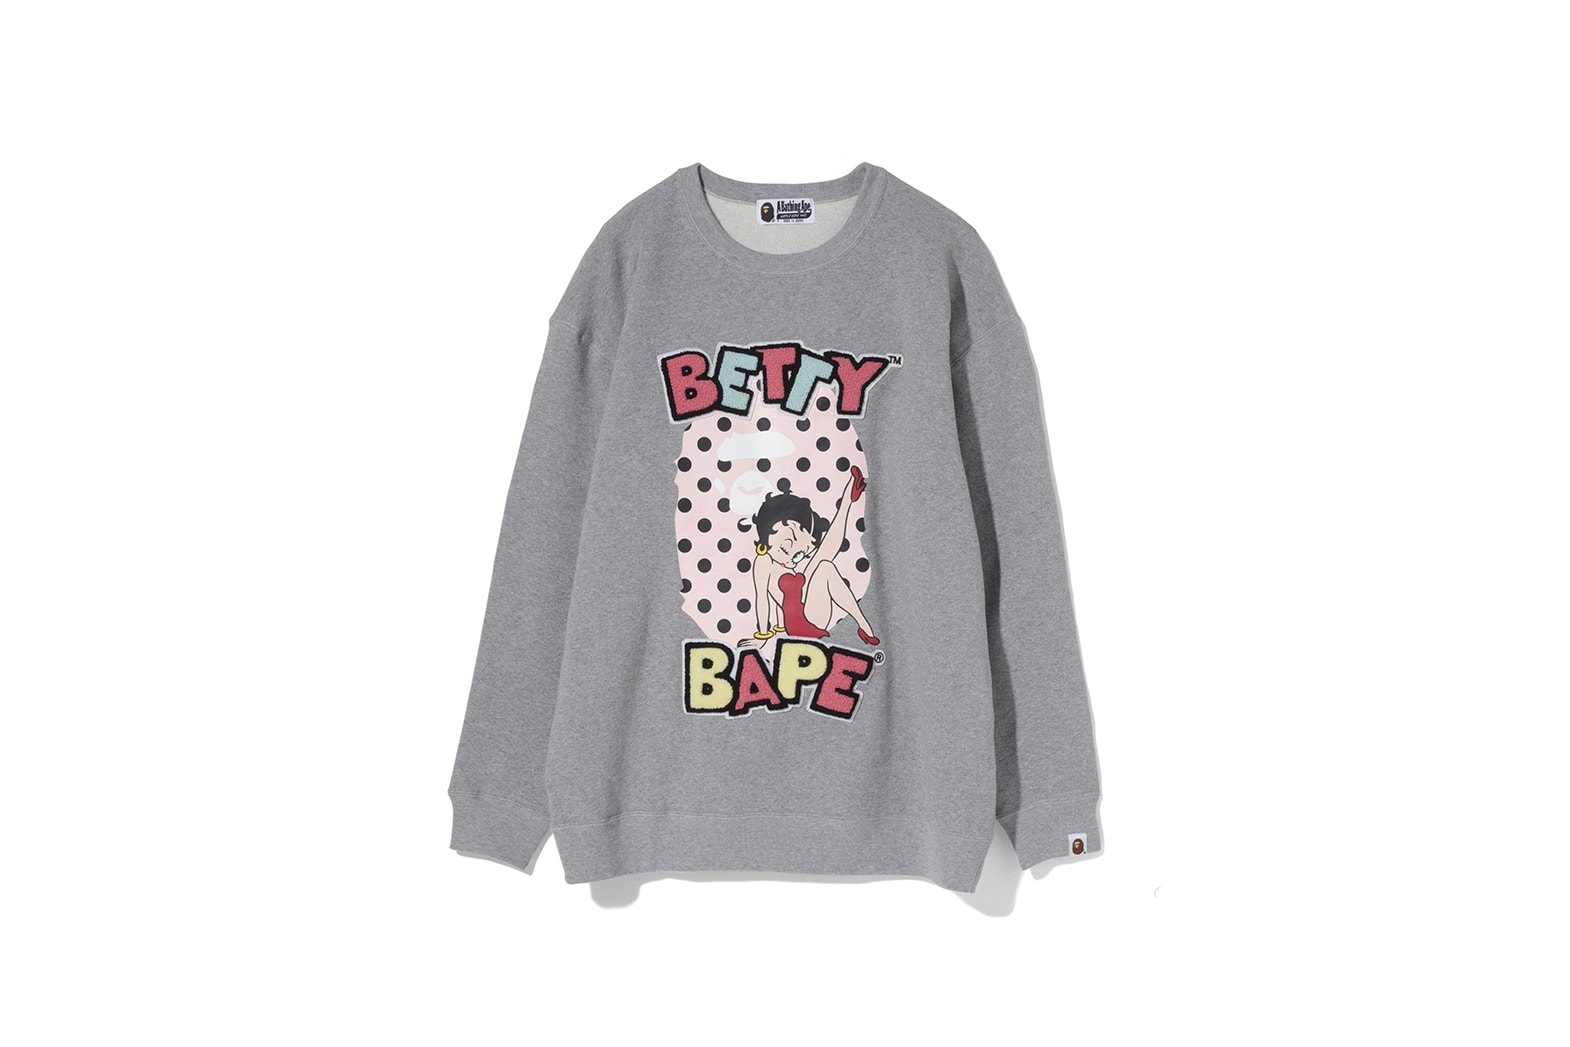 Betty Boop x BAPE 全新聯名系列